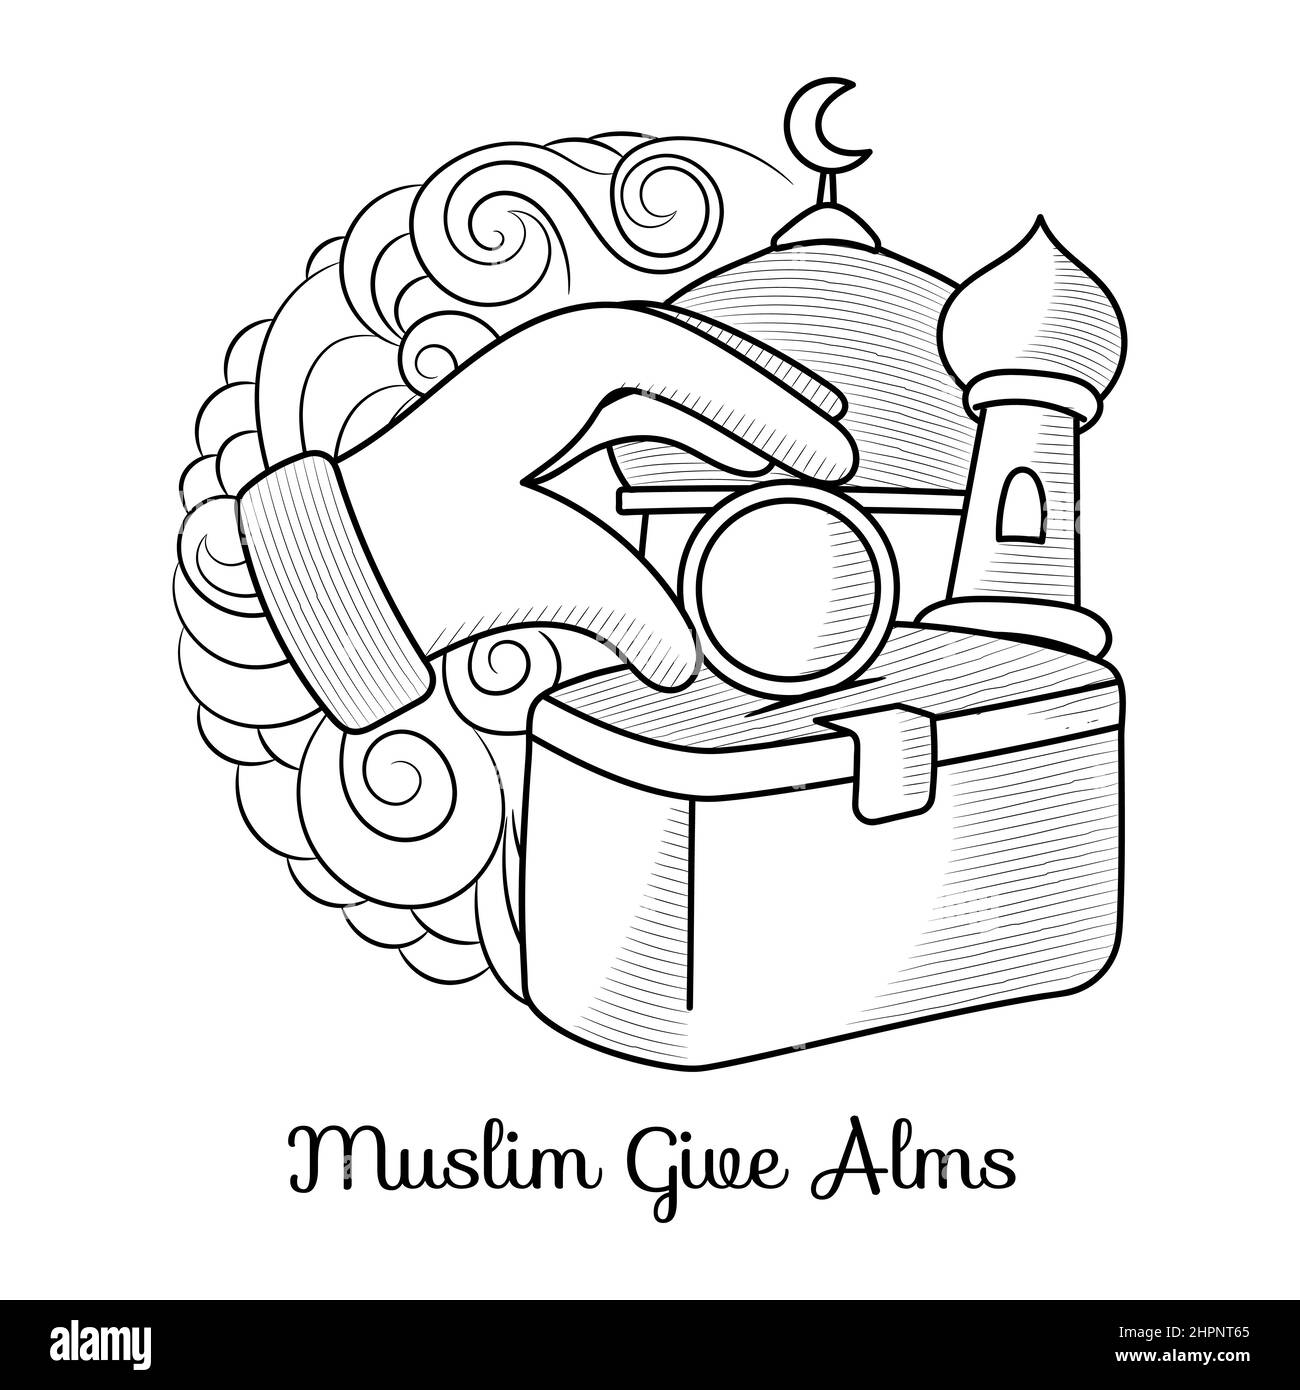 Handgezeichnete ramadan muslim Almosen geben Doodle Illustration Stock Vektor